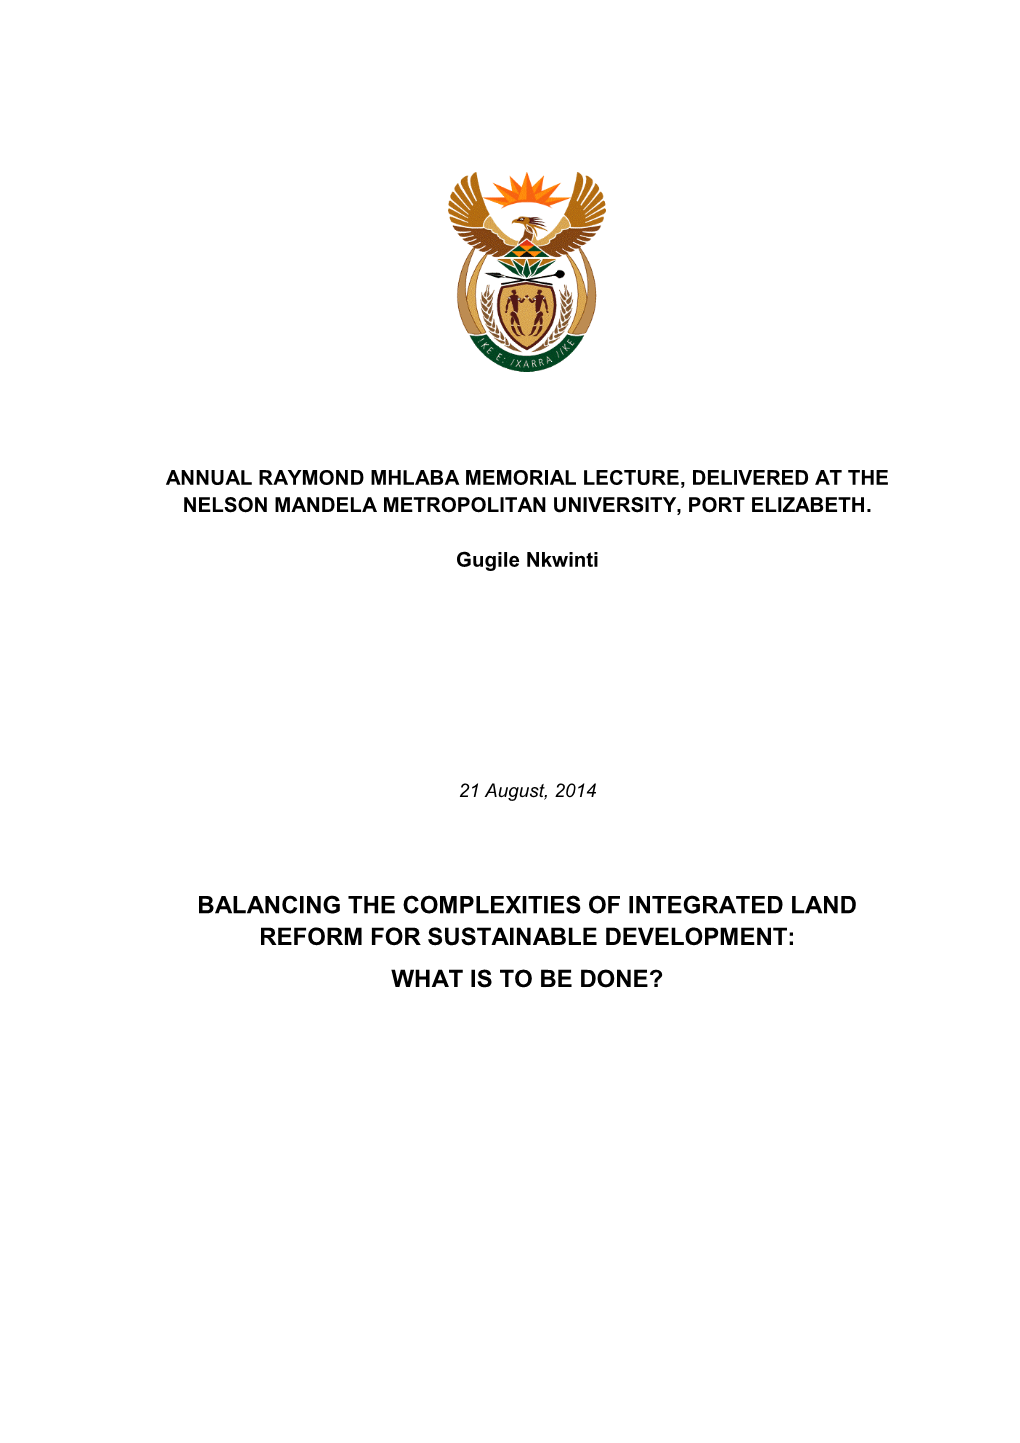 Raymond Mhlaba Memorial Lecture, Delivered at the Nelson Mandela Metropolitan University, Port Elizabeth